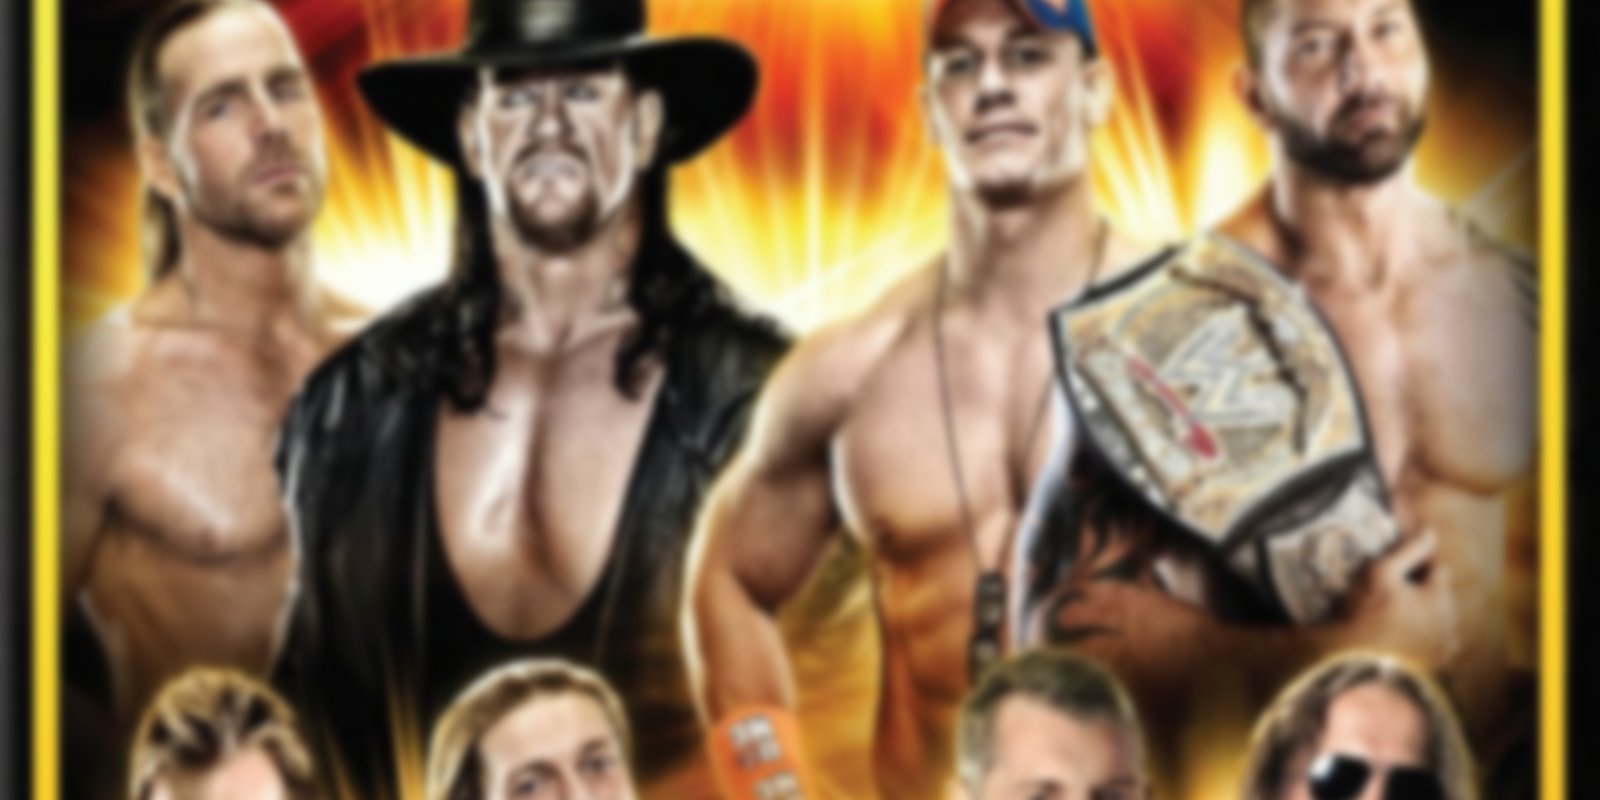 WWE - WrestleMania 26